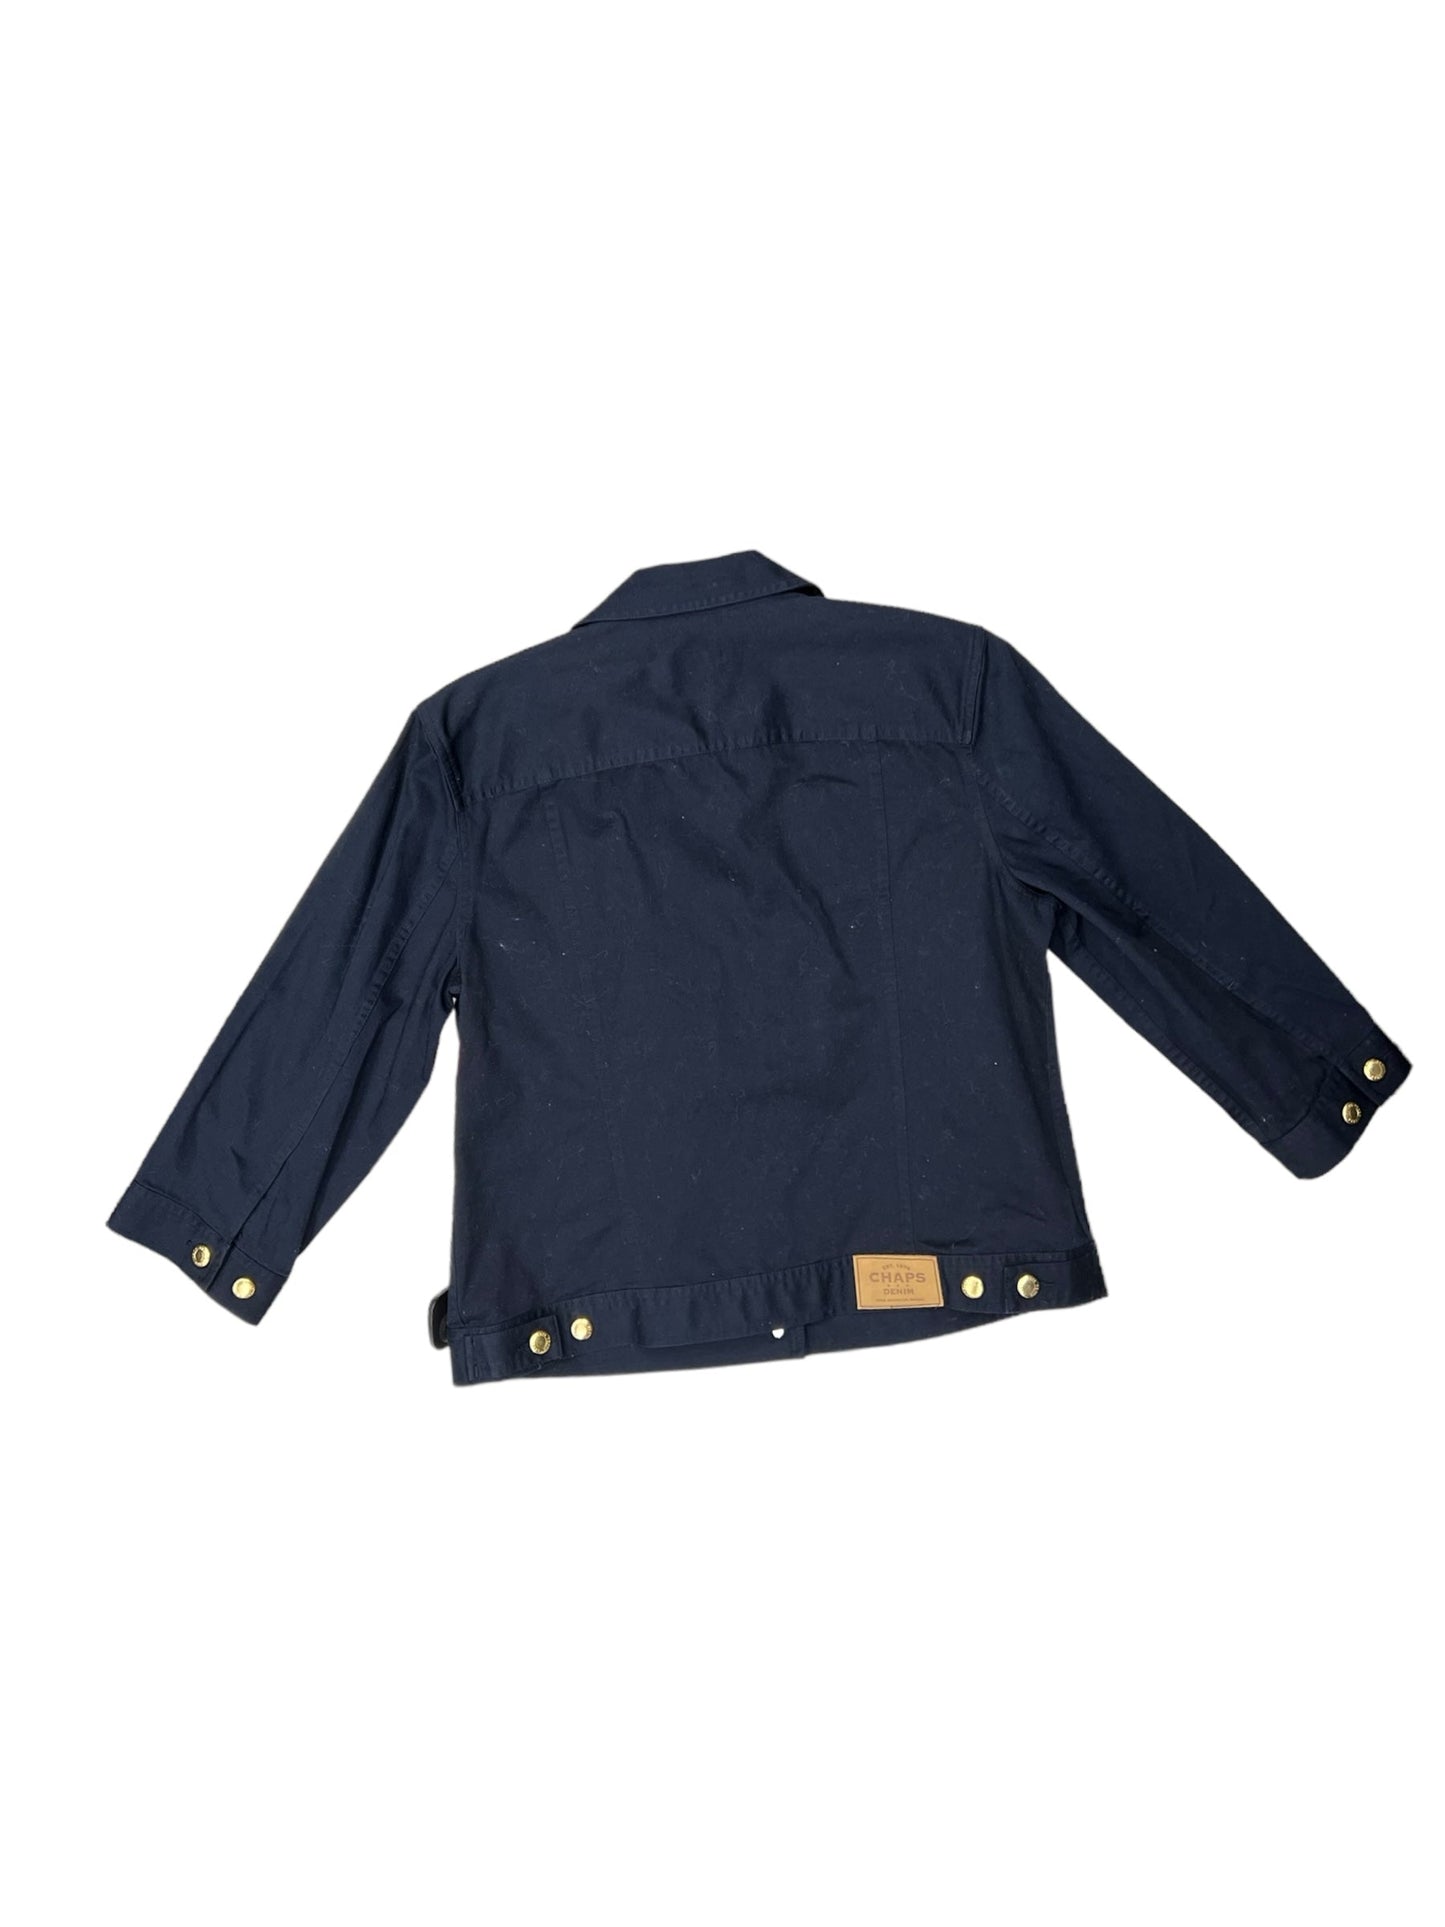 Jacket Denim By Chaps  Size: L